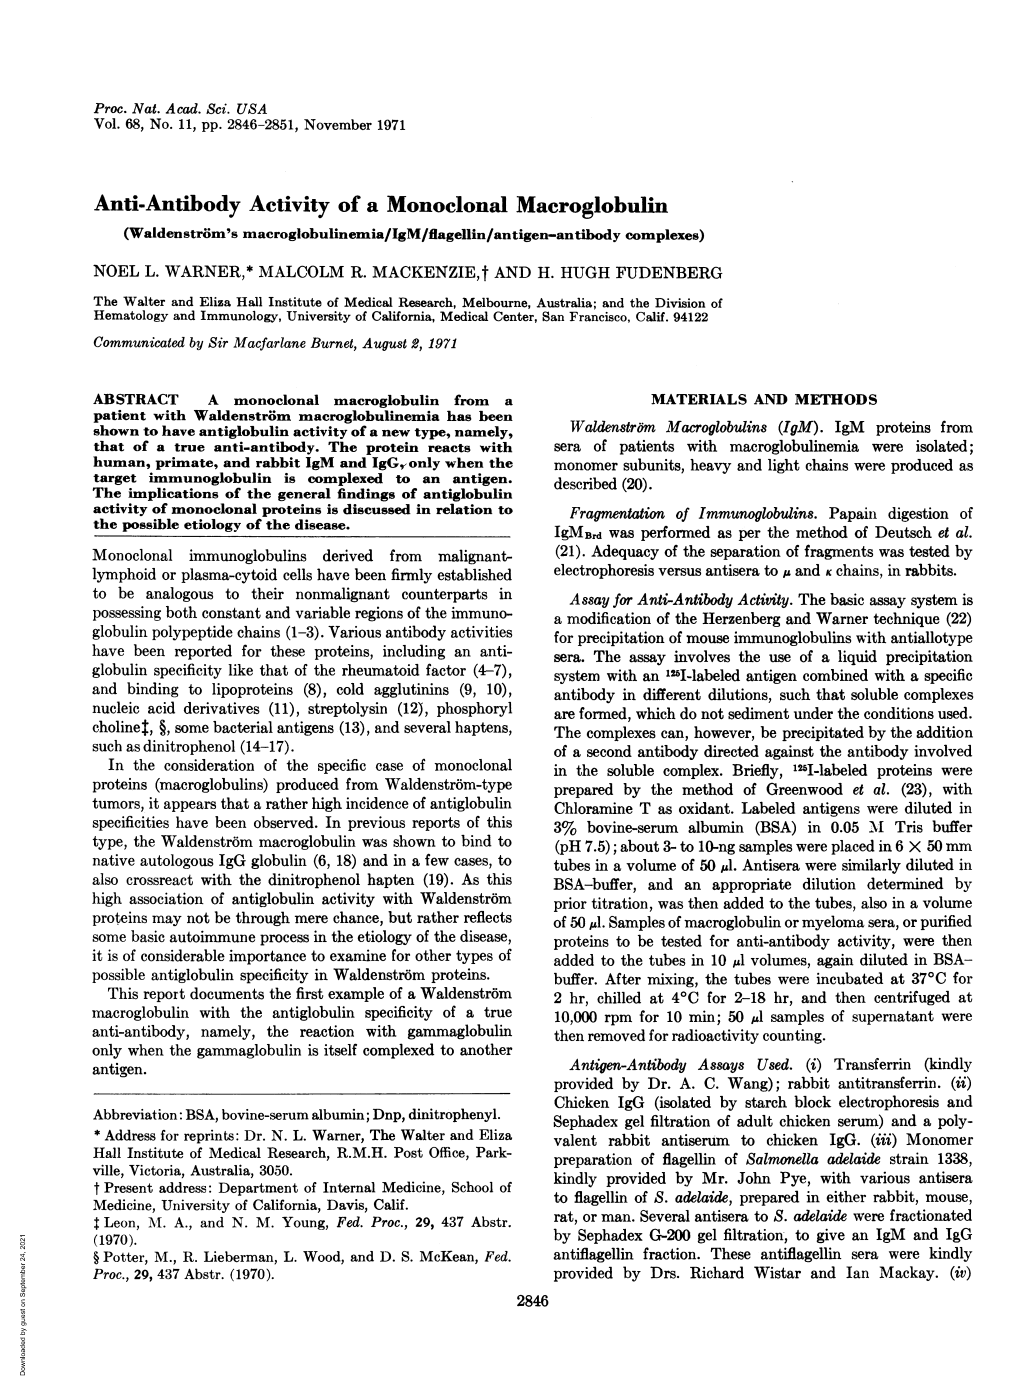 Anti-Antibody Activity of a Monoclonal Macroglobulin (Waldenstroim's Macroglobulinemia/Igm/Flagellin/Antigen-Antibody Complexes)